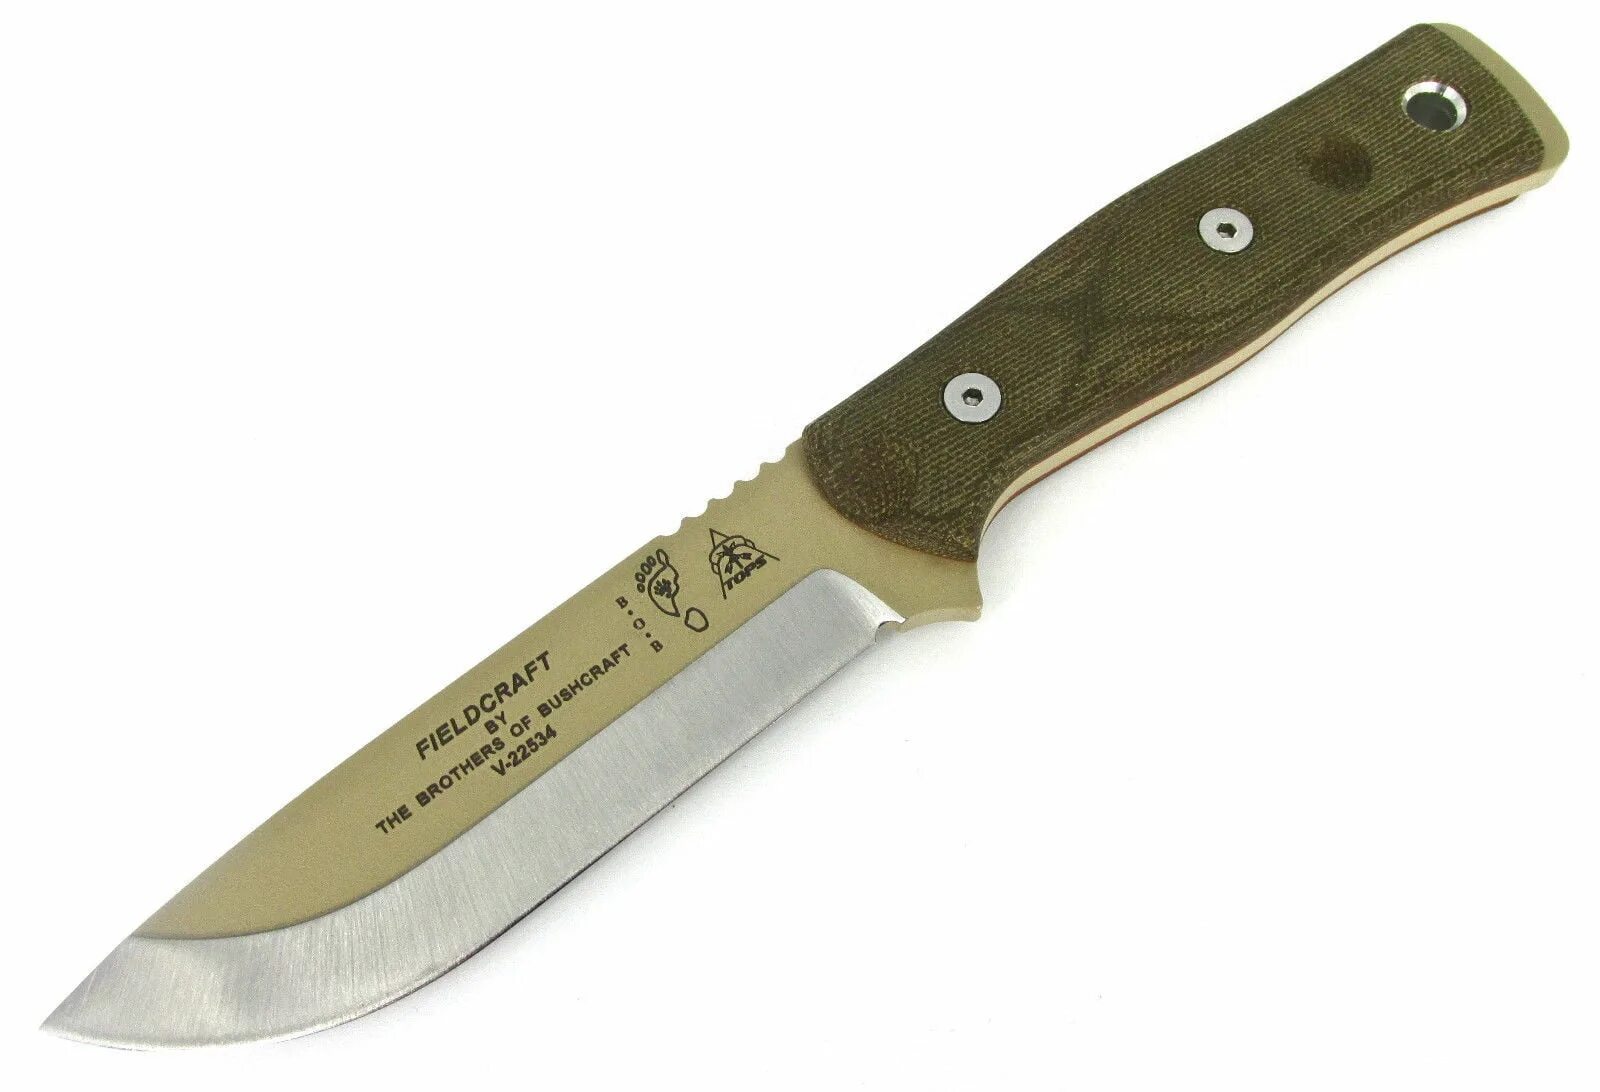 Fieldcraft Bushcraft Knife нож. Нож Tops Knives Fieldcraft. Miller Bros ножи m-8. Складной нож охотника.